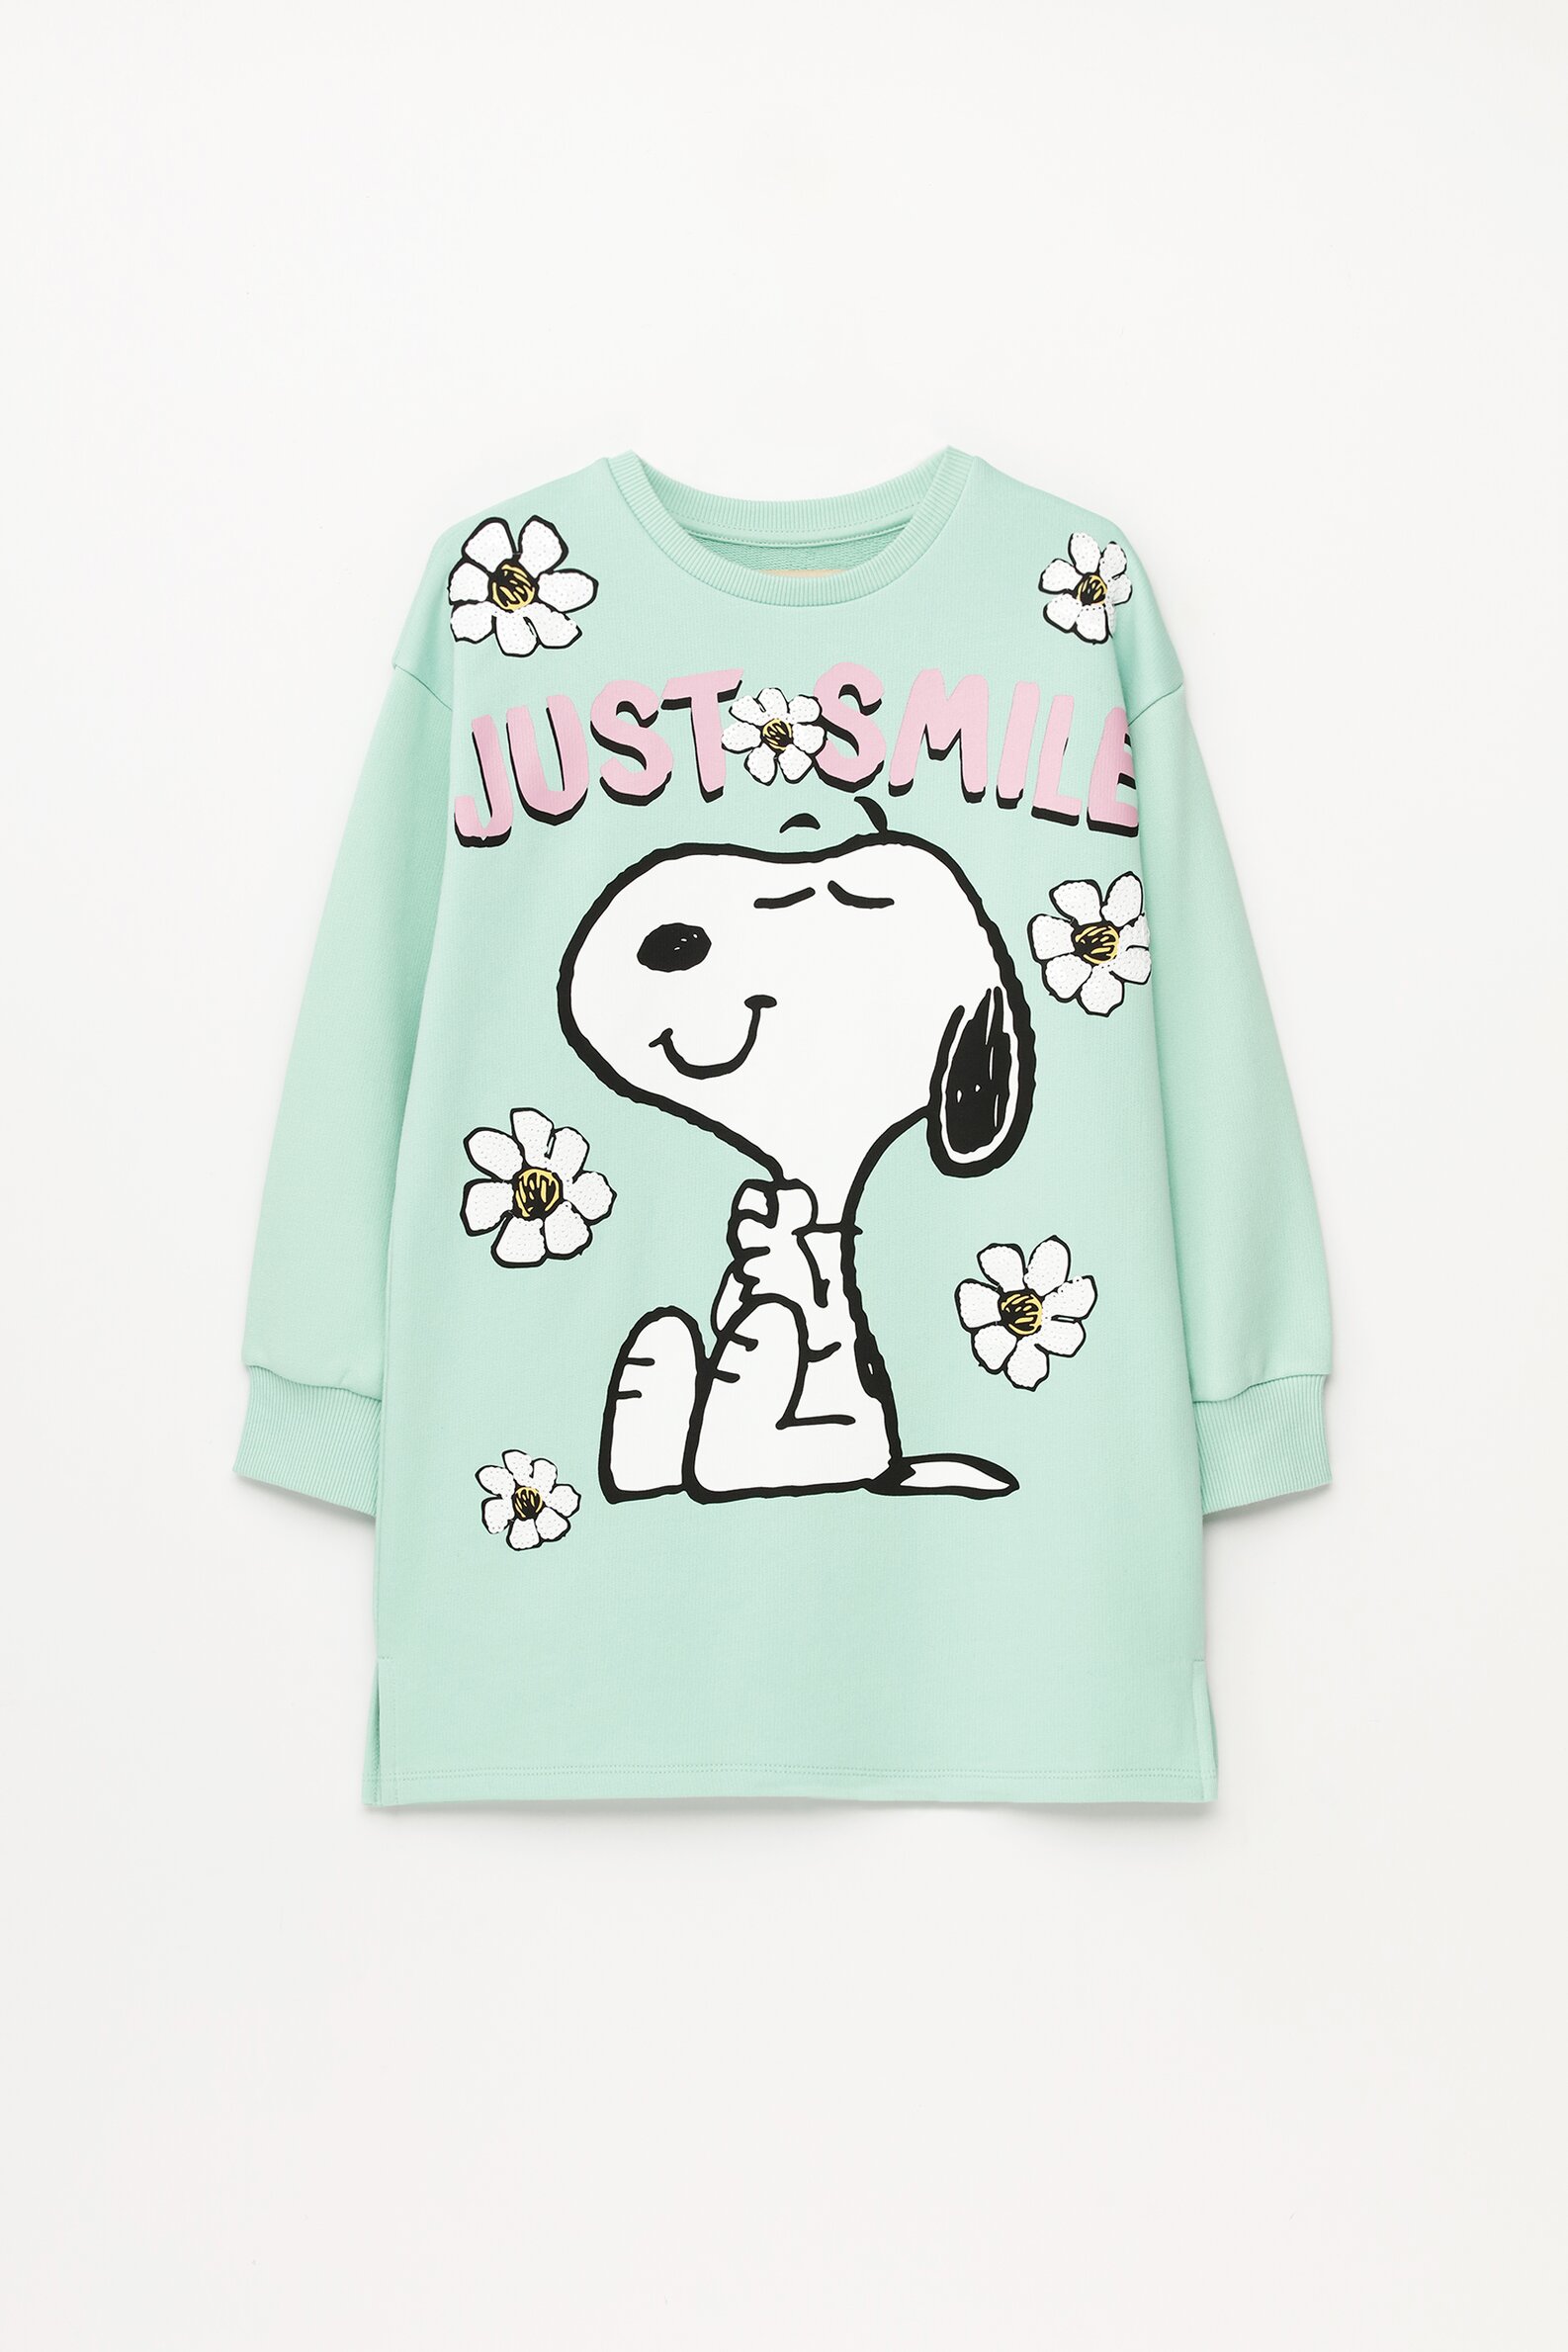 Snoopy Peanuts™ dress - Dresses - CLOTHING - Girl - Kids 